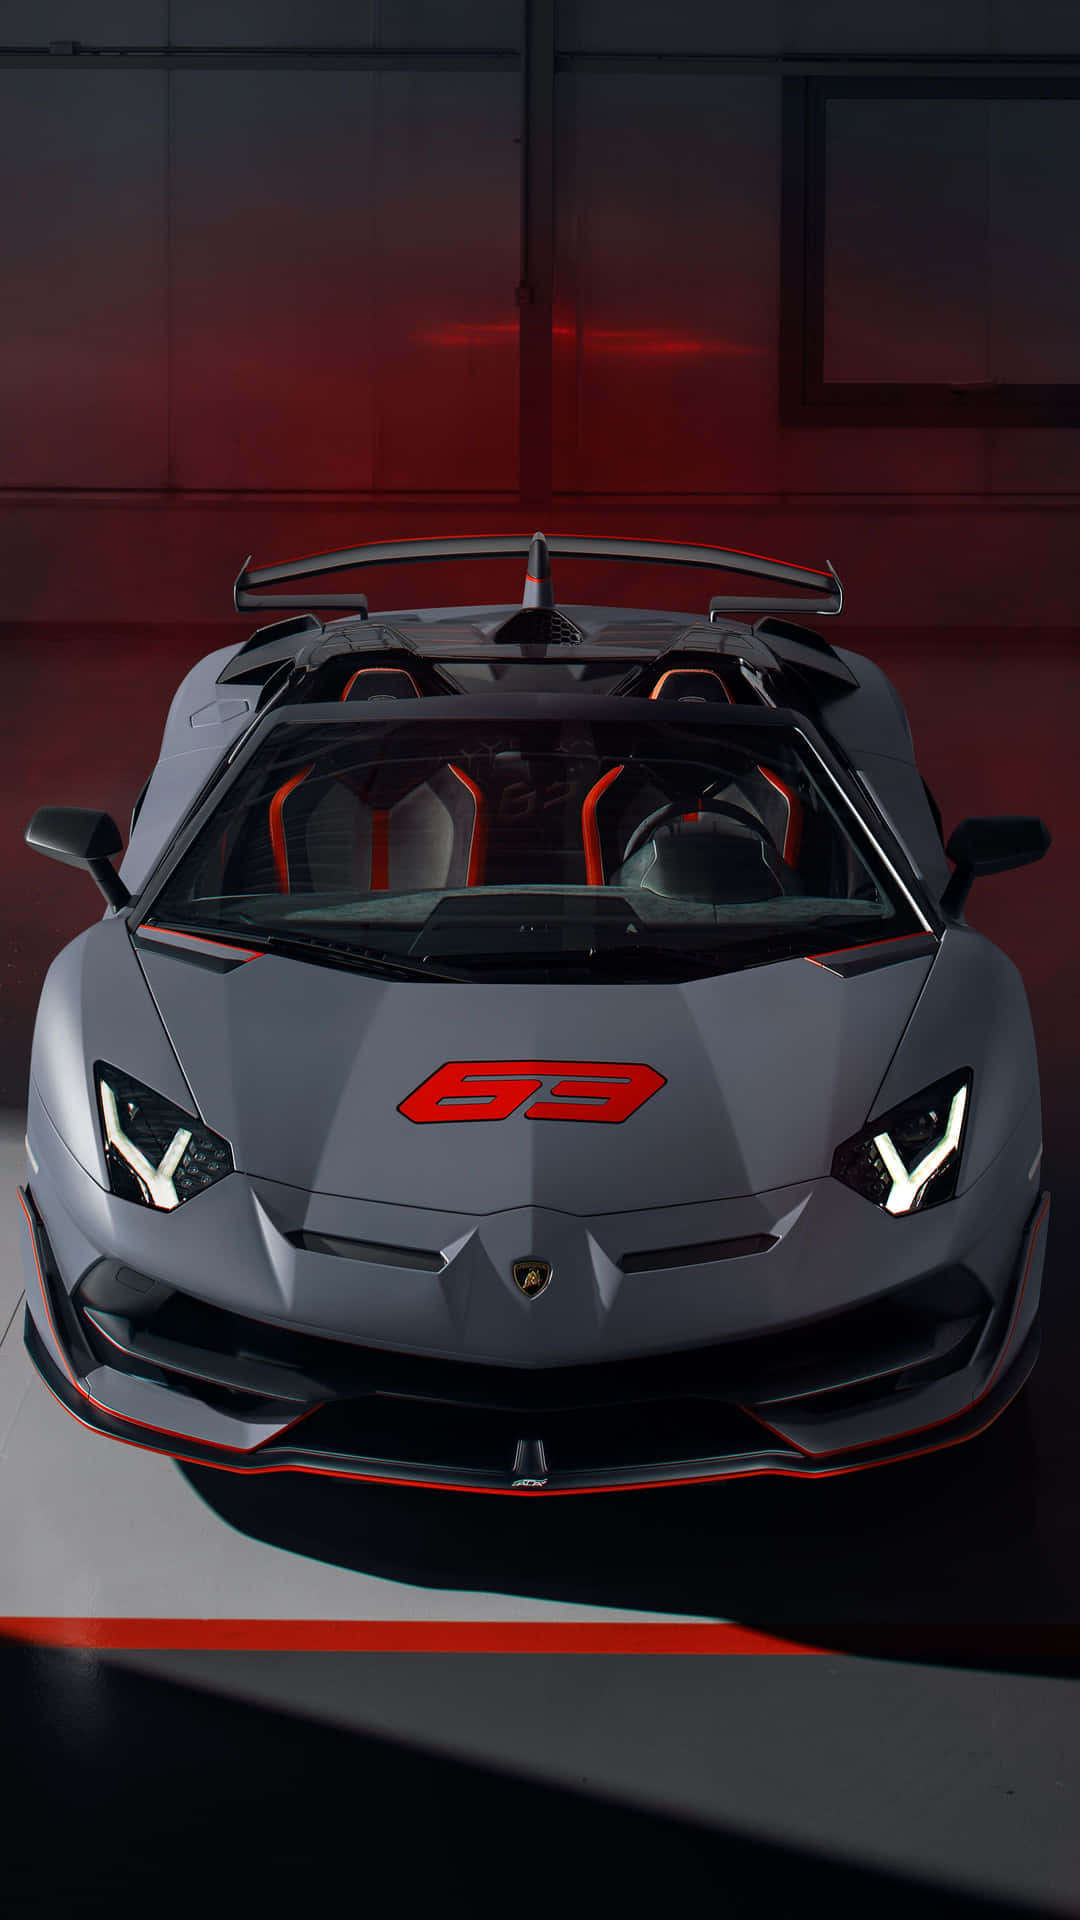 The Latest in Luxury Technology: Lamborghini Phone Wallpaper